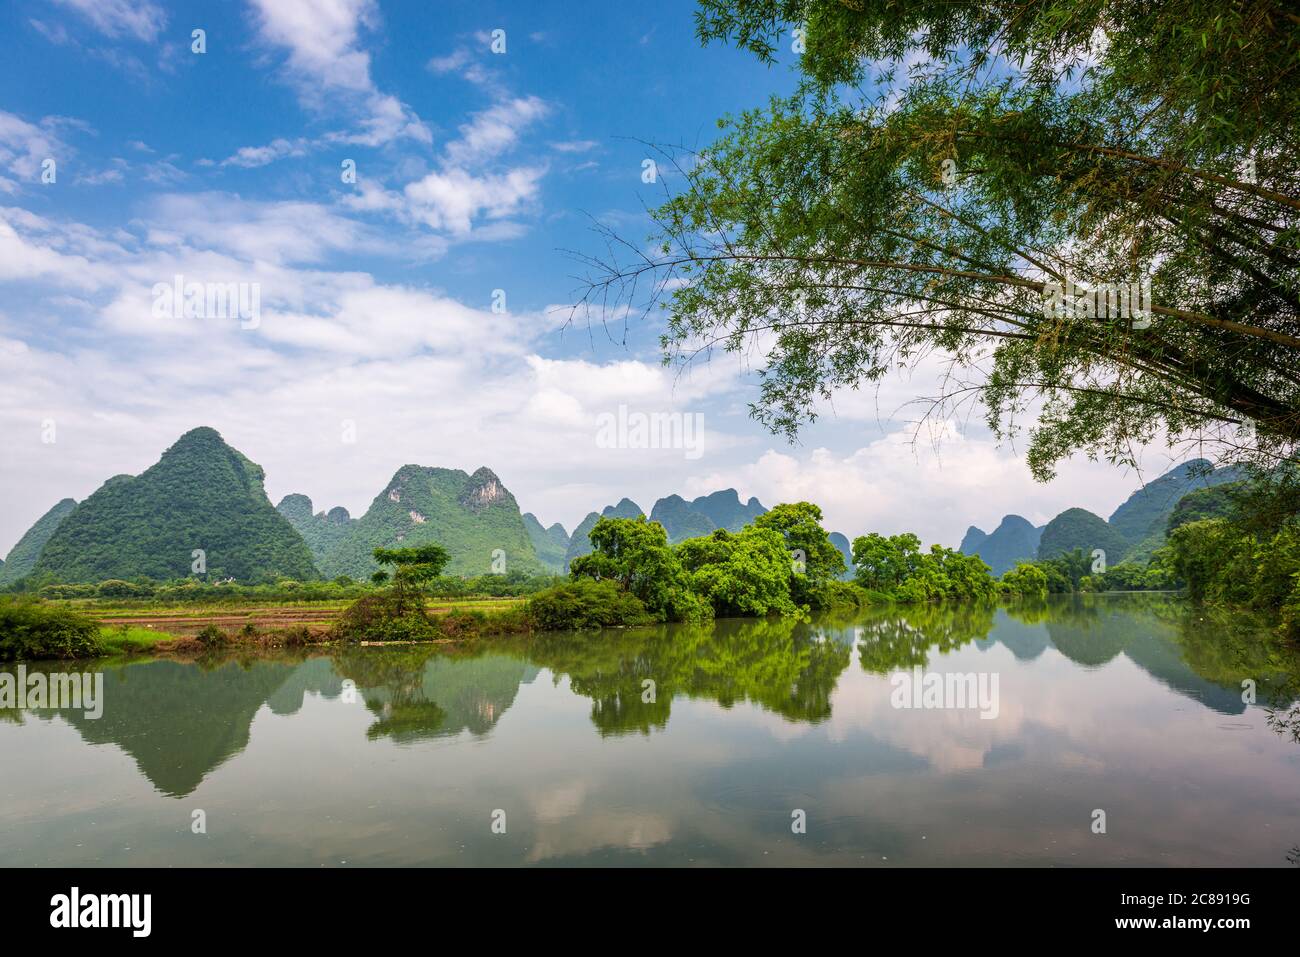 Karst Mountains Landscape of Guilin, China. Stock Photo